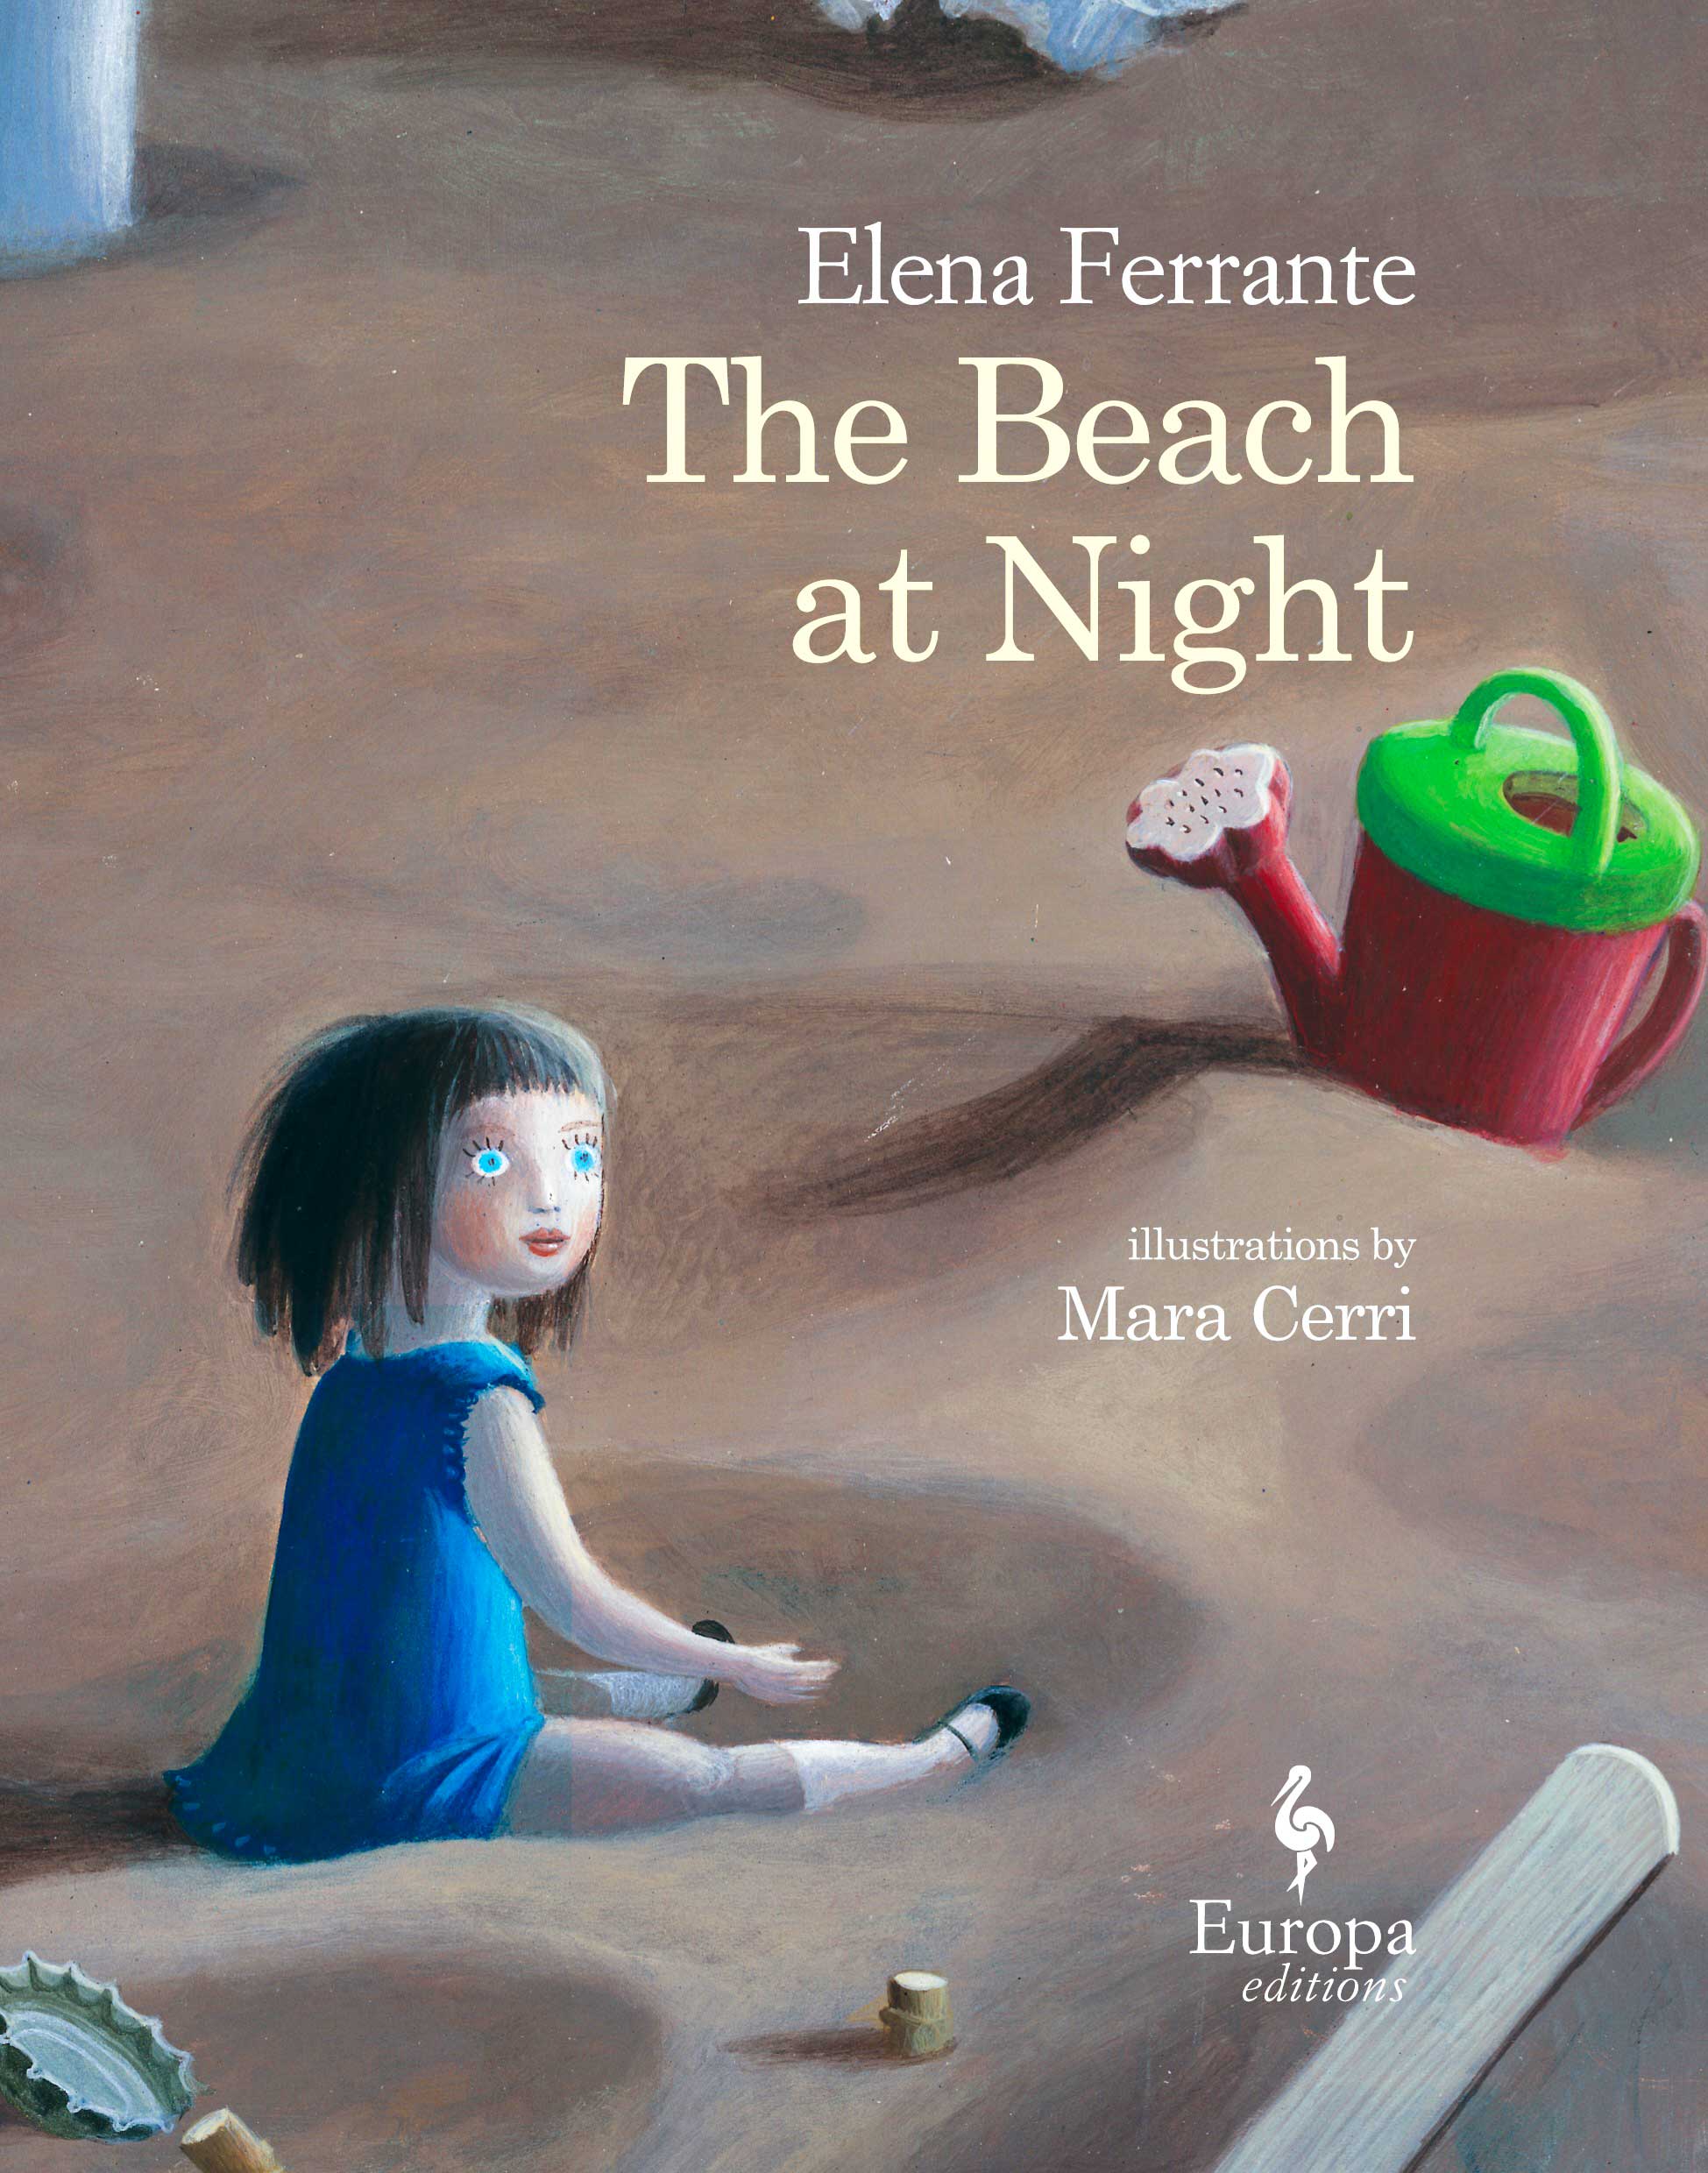 Elena Ferrante brings dark charm to young readers (No Credit)